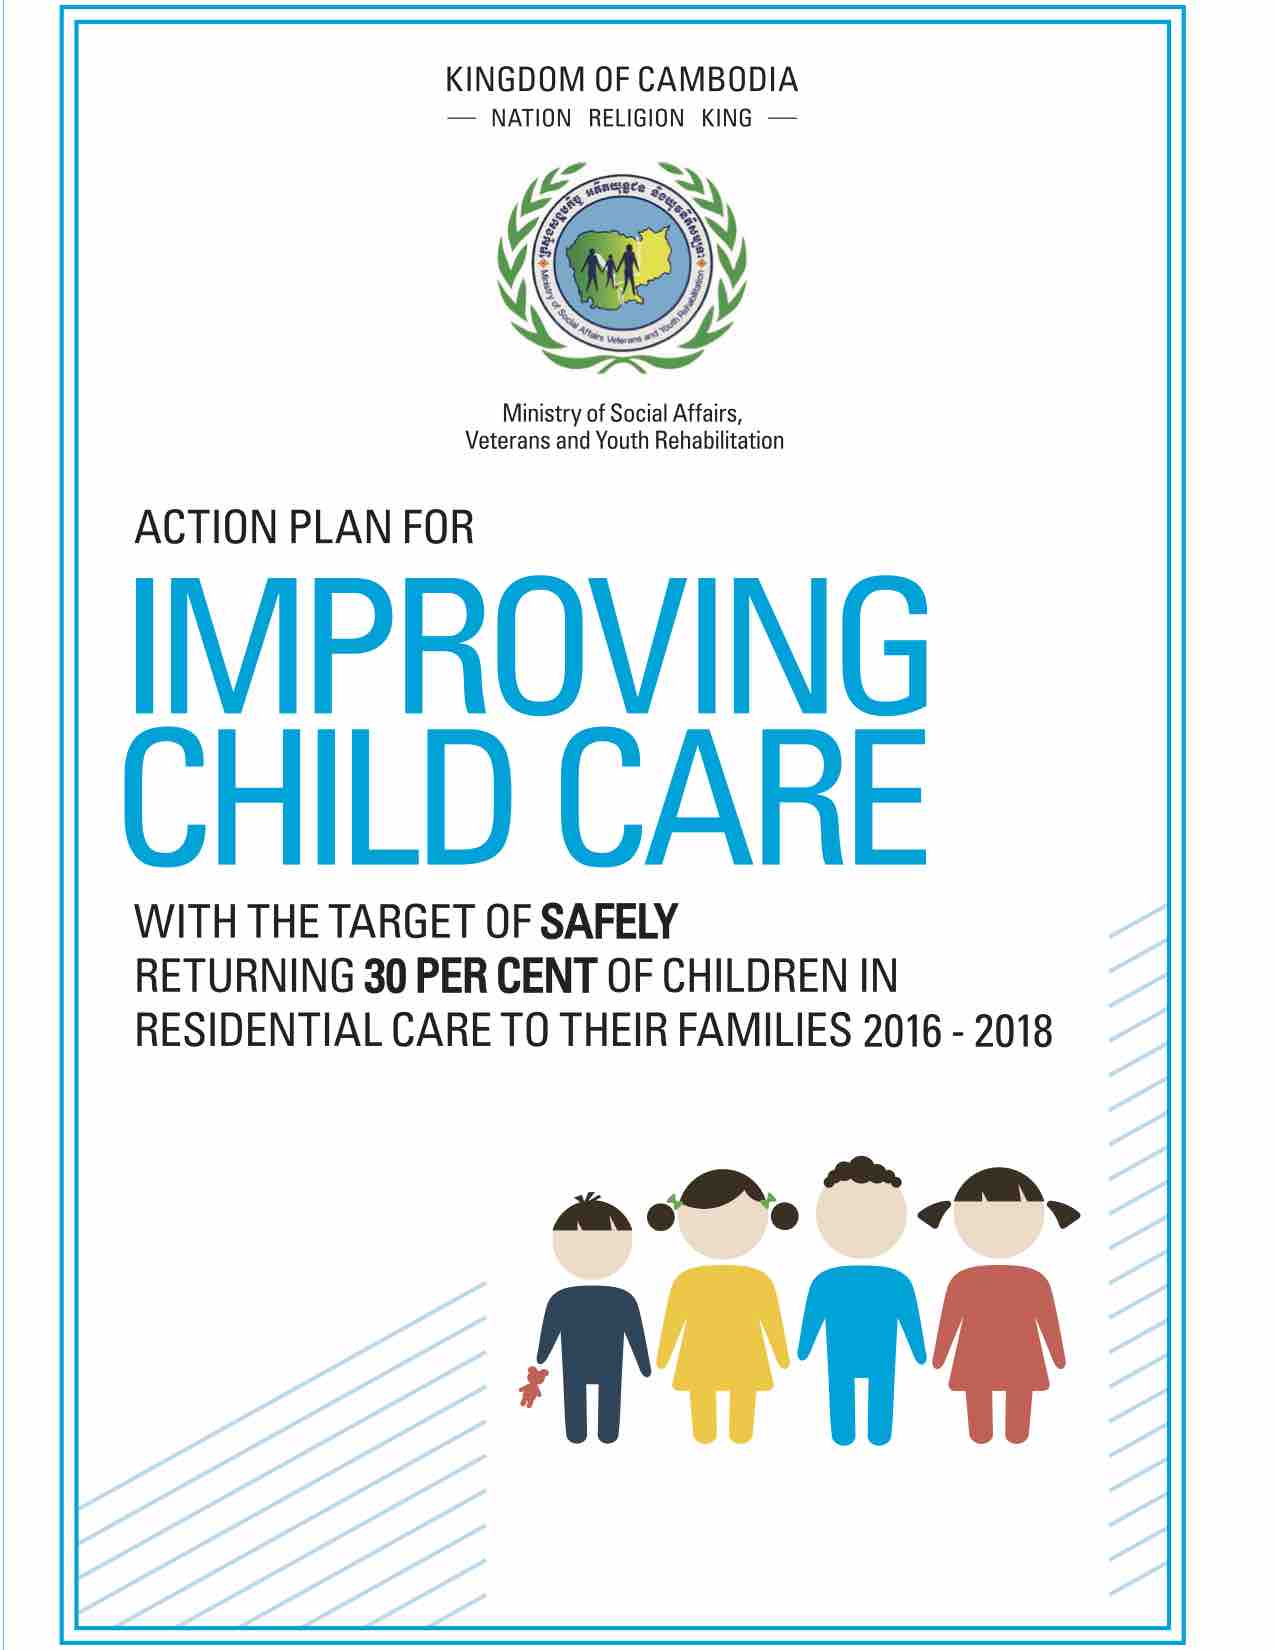 https://strongfamily.mosvy.gov.kh/wp-content/uploads/2020/02/Cambodia-Action-Plan-for-Improving-Child-Care-2016-2018-EN.jpg